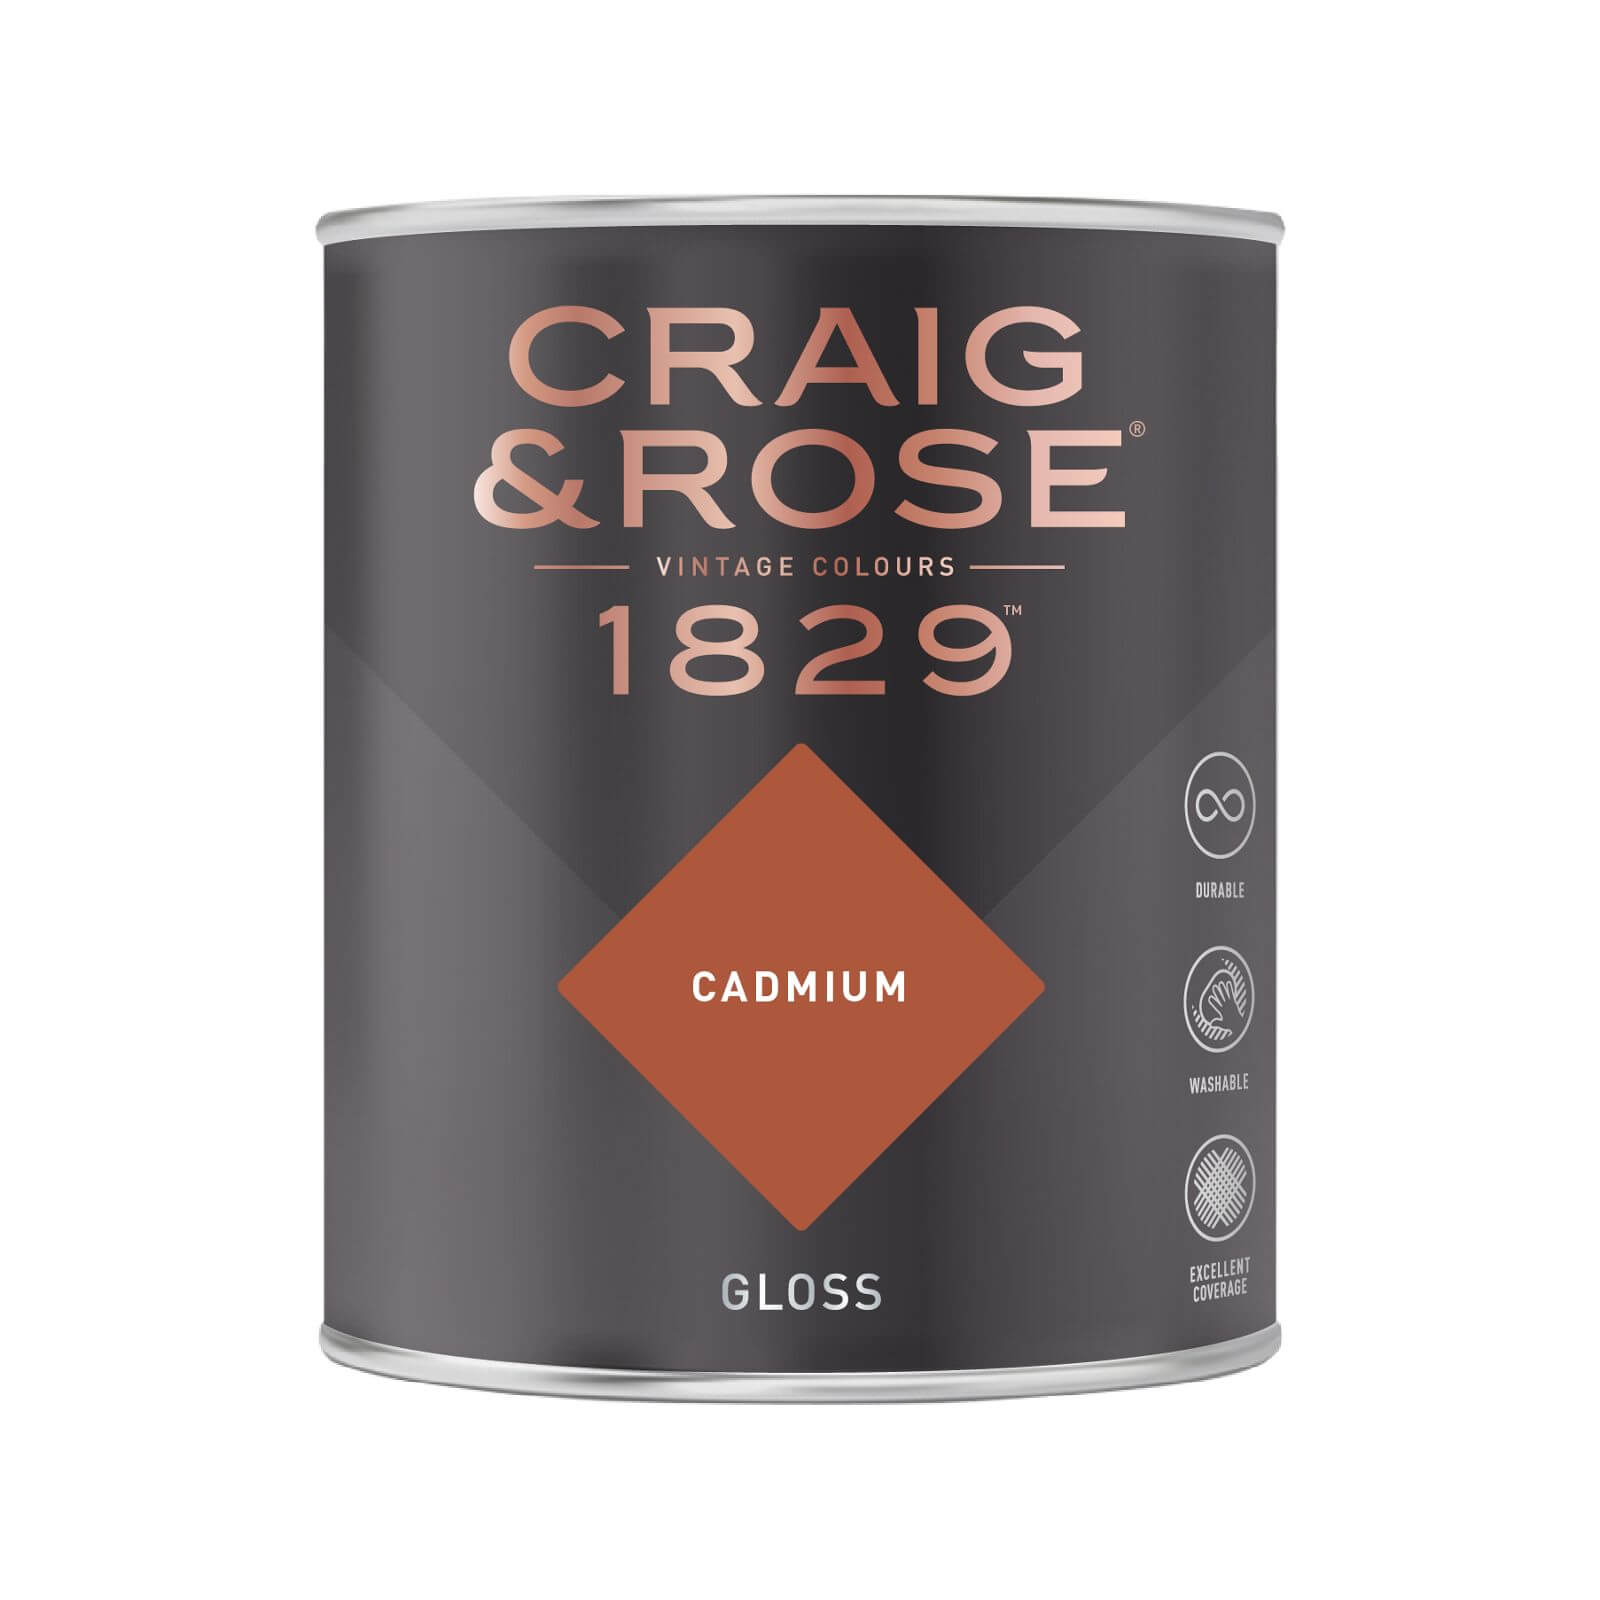 Craig & Rose 1829 Gloss Paint Cadmium -750ml